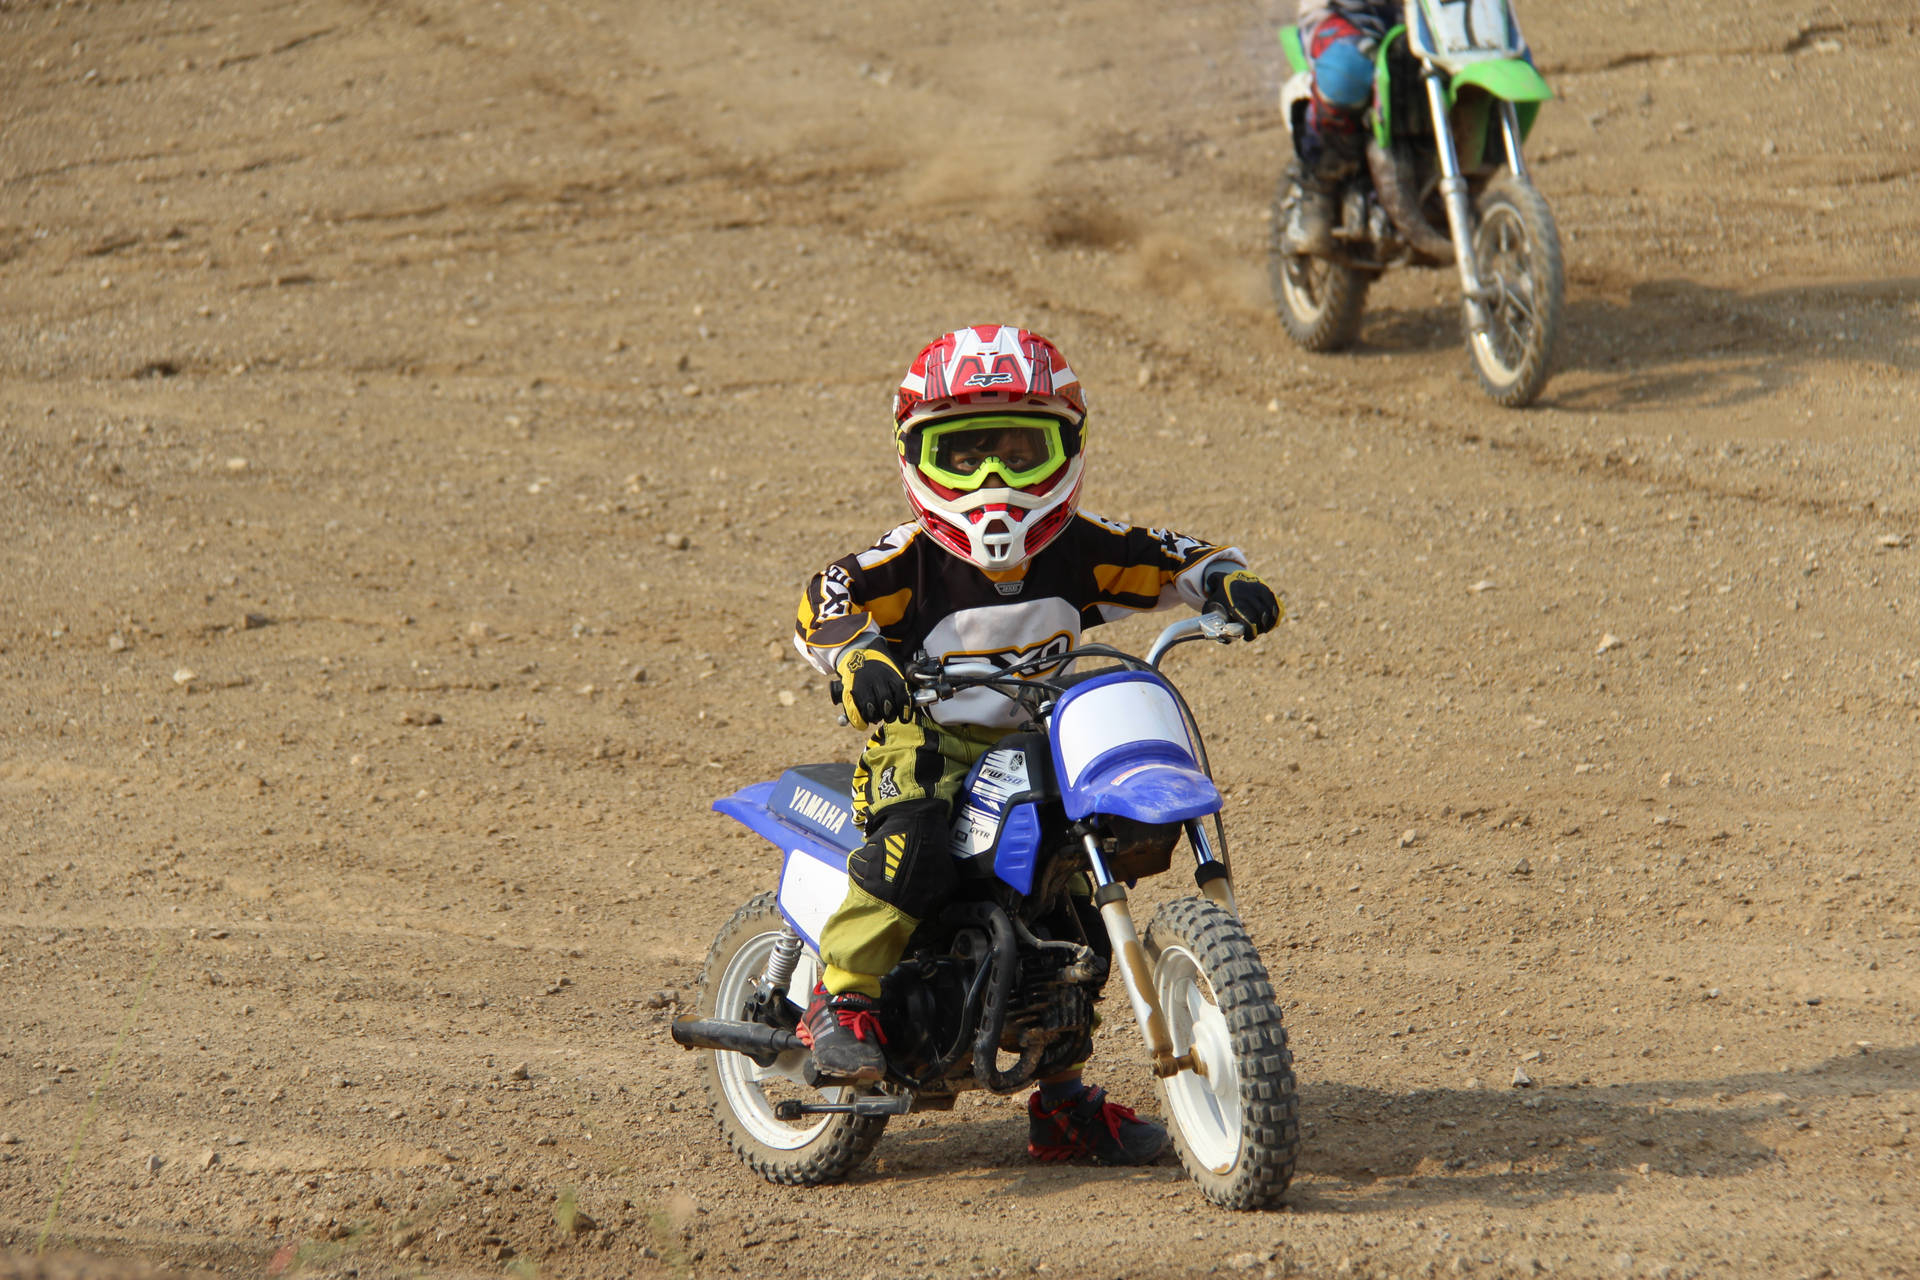 Young Racer At Motocross Racing